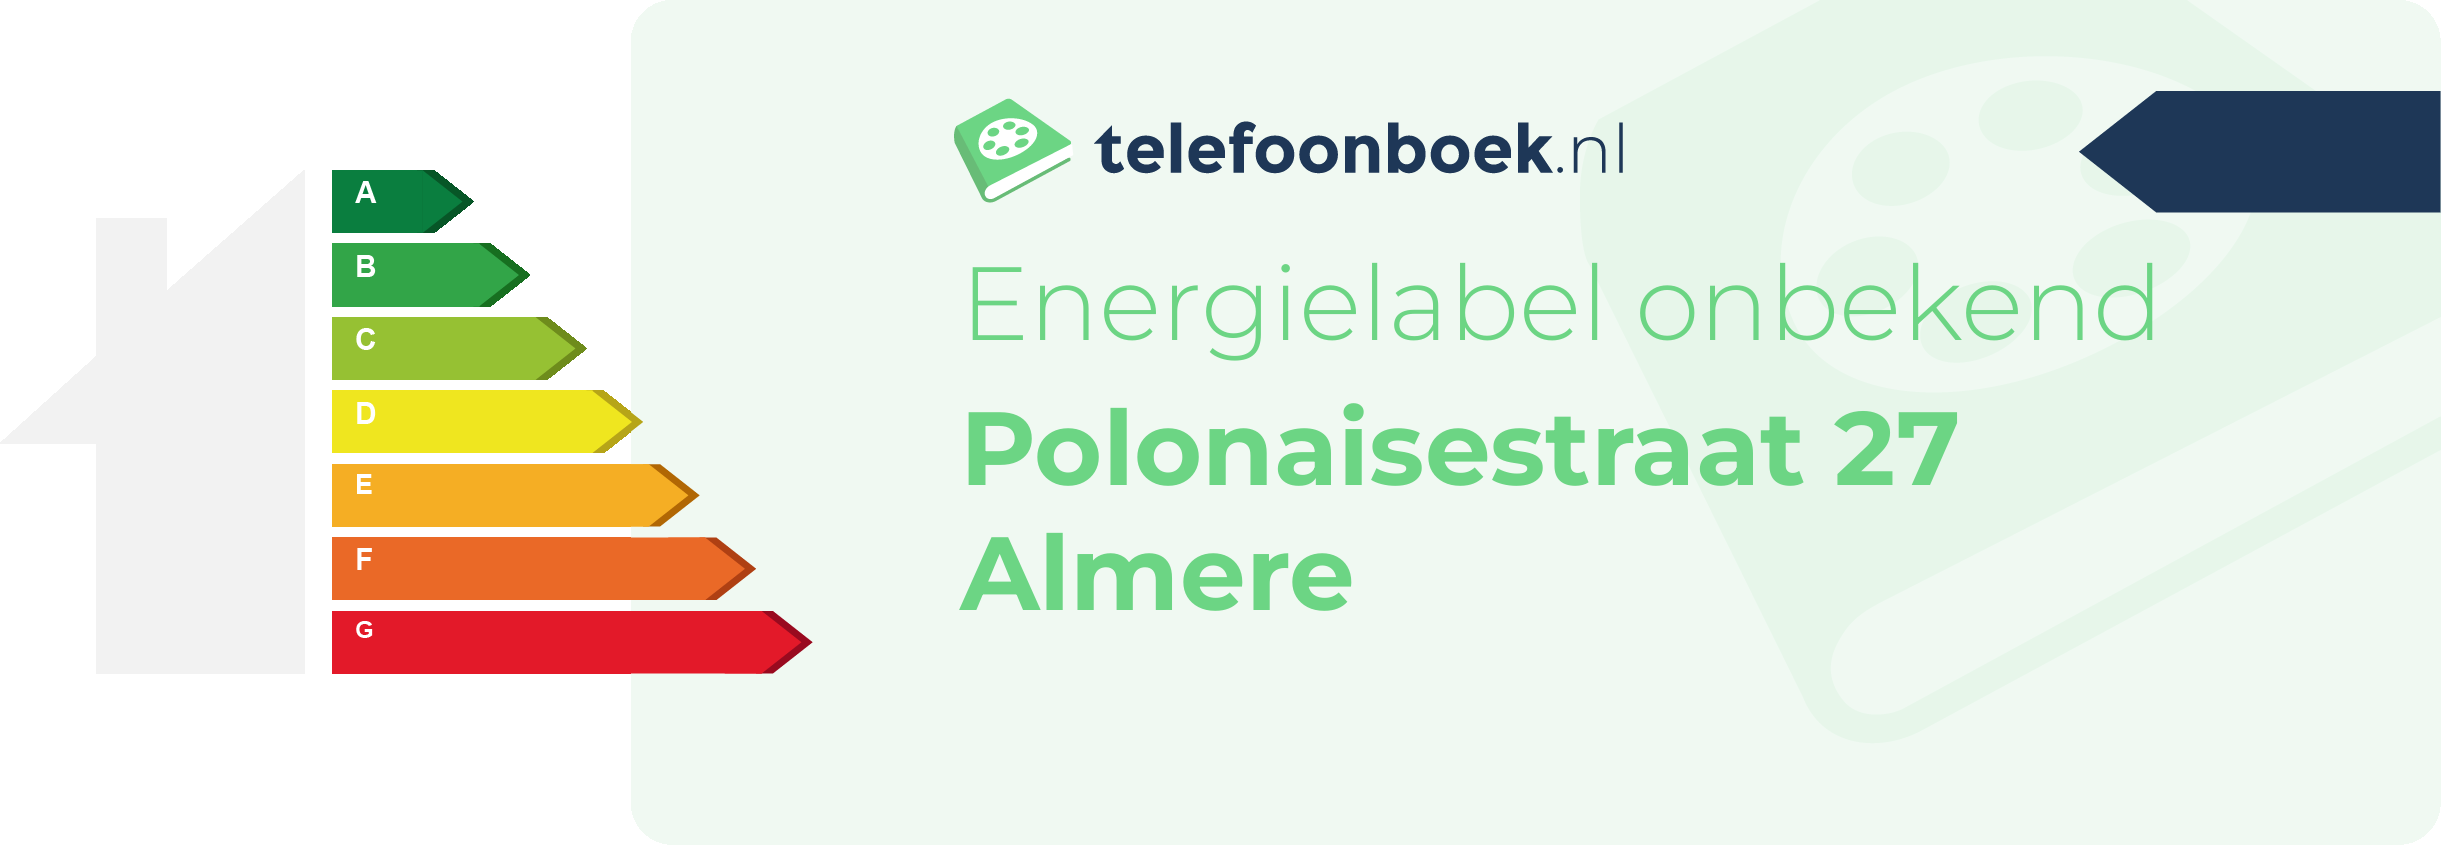 Energielabel Polonaisestraat 27 Almere